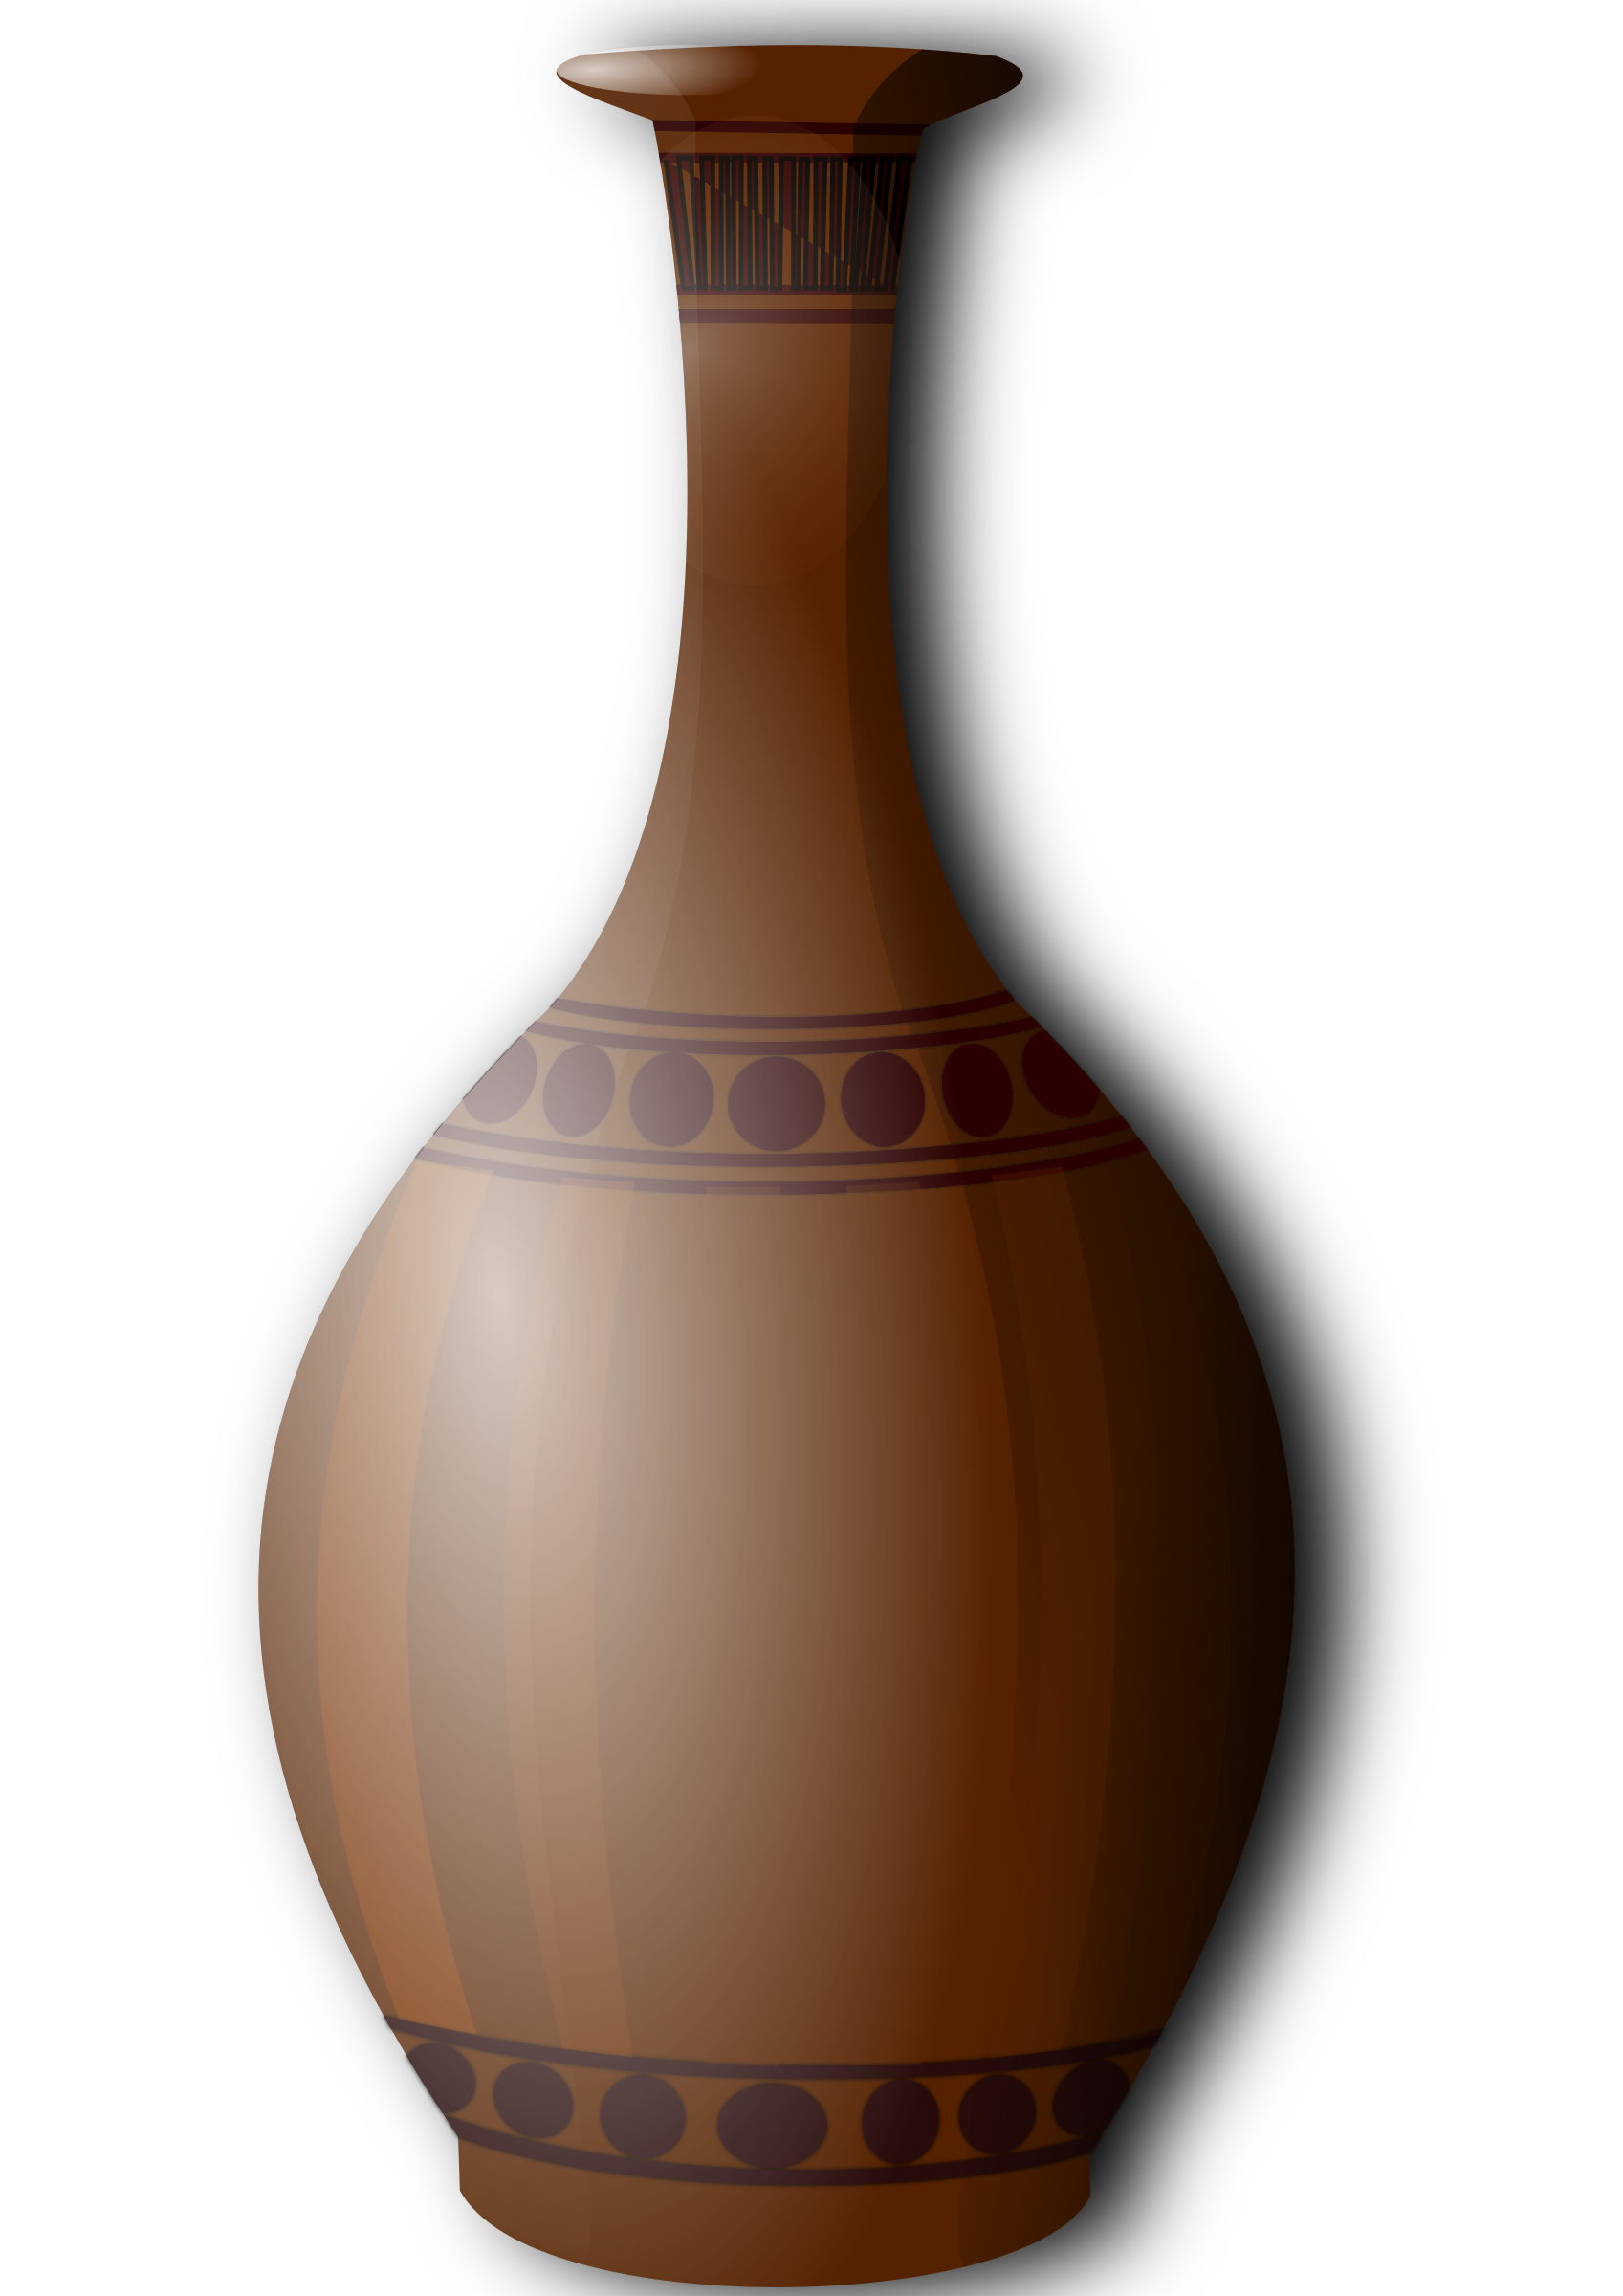 Brown vase clipart. Clip arts